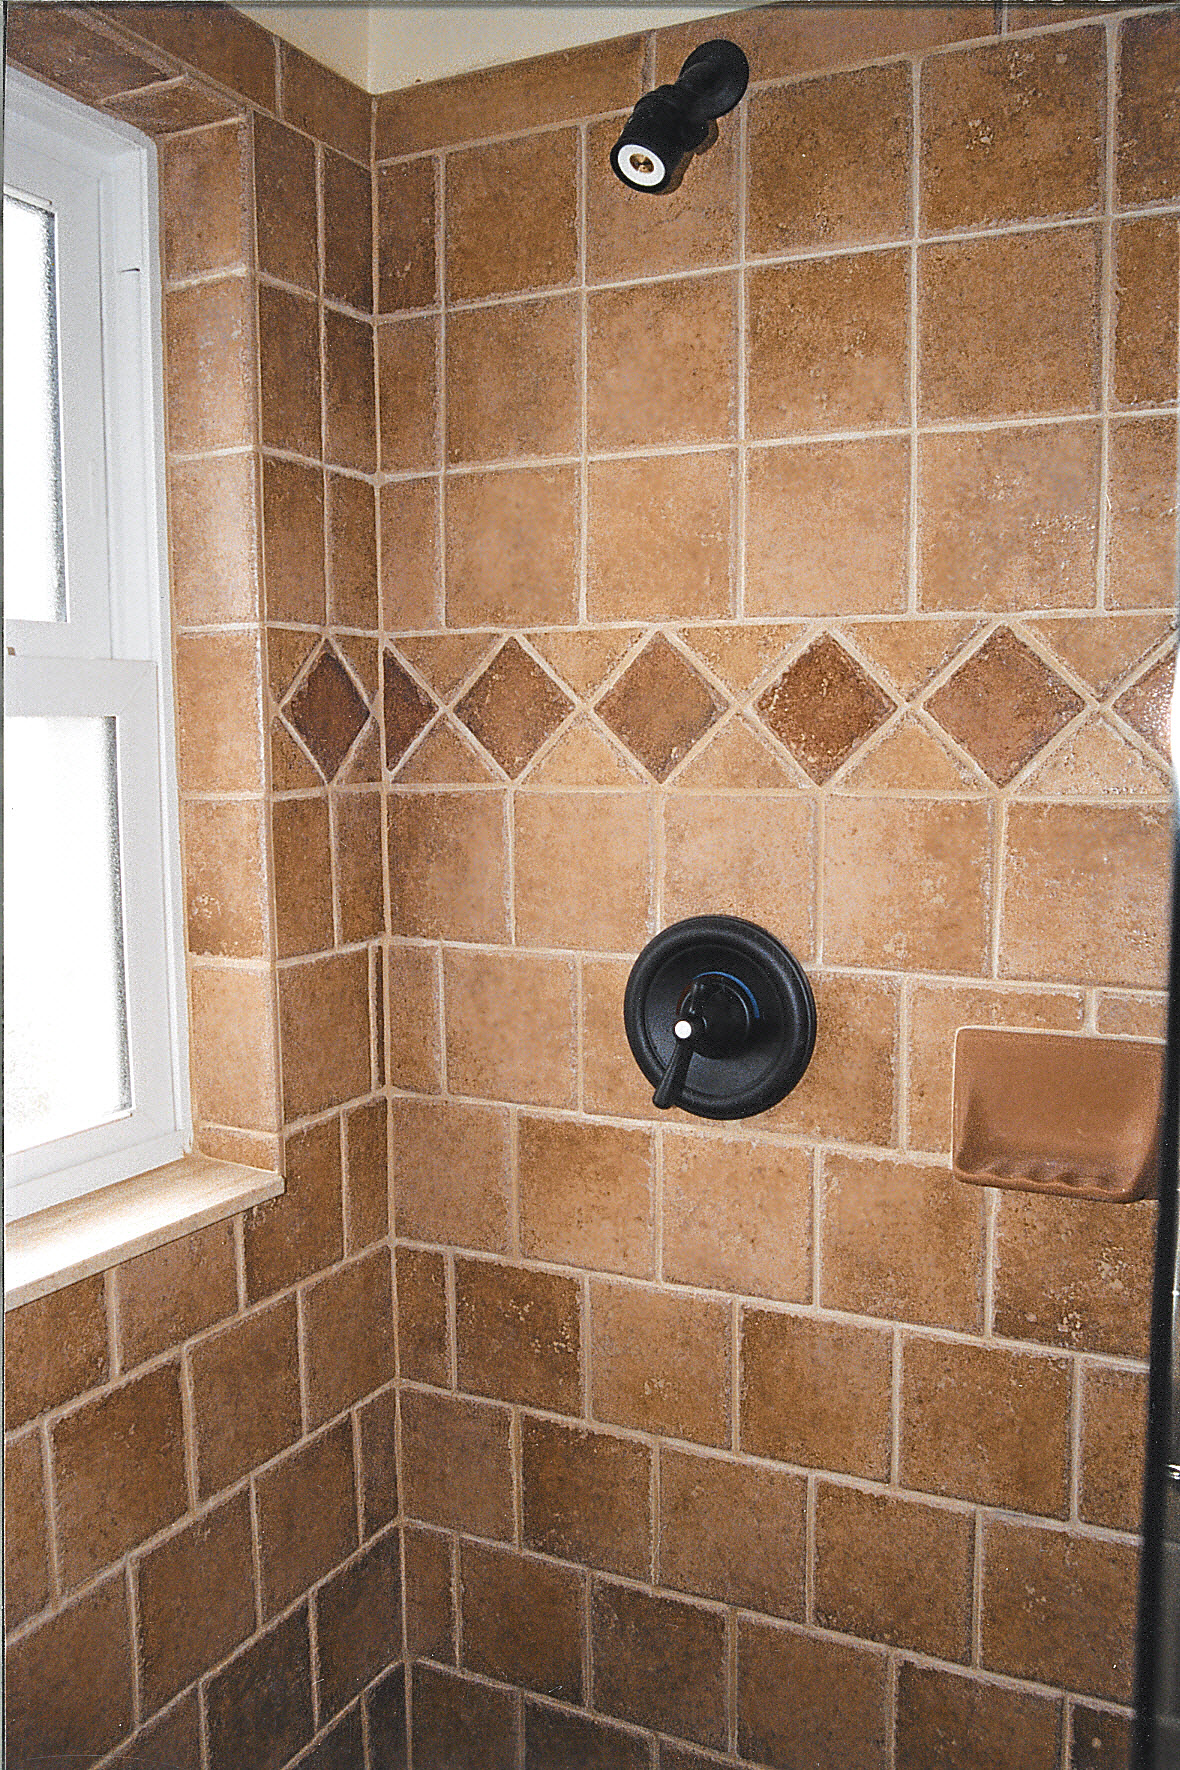 italian-natural-borders-replacing-board-black-wall-basins-seats-ceramics-mosaics-inserts-sheet-cubicles-restroom-tumbled-build-bathroom-wall-tile-option-for-modern-home